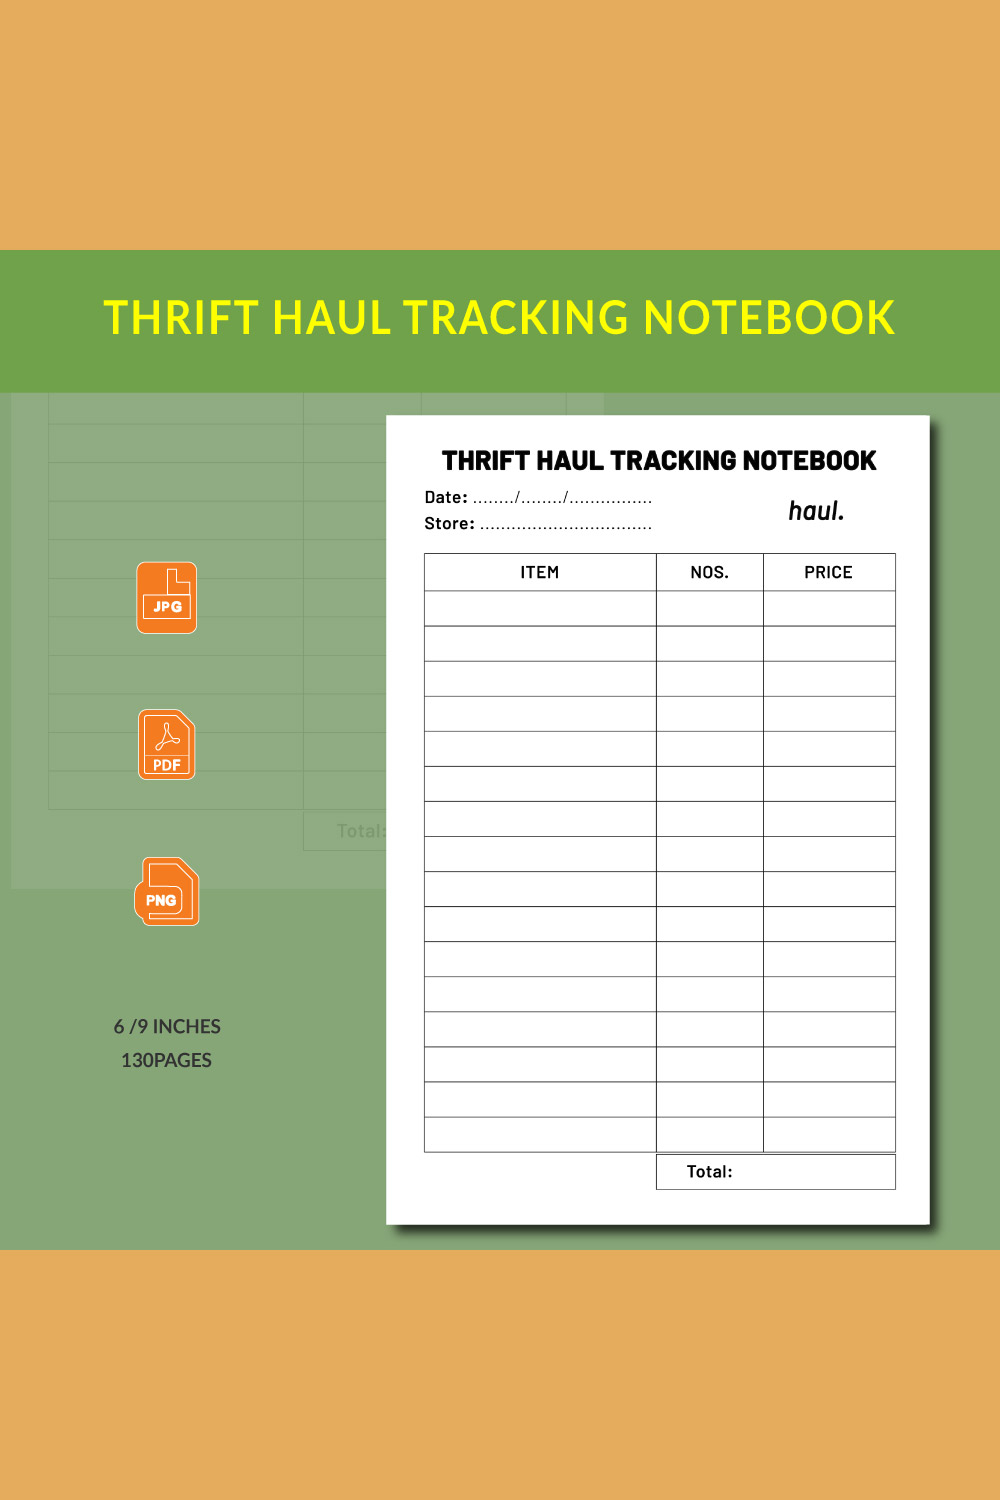 Thrift Haul Tracking Notebook pinterest image.